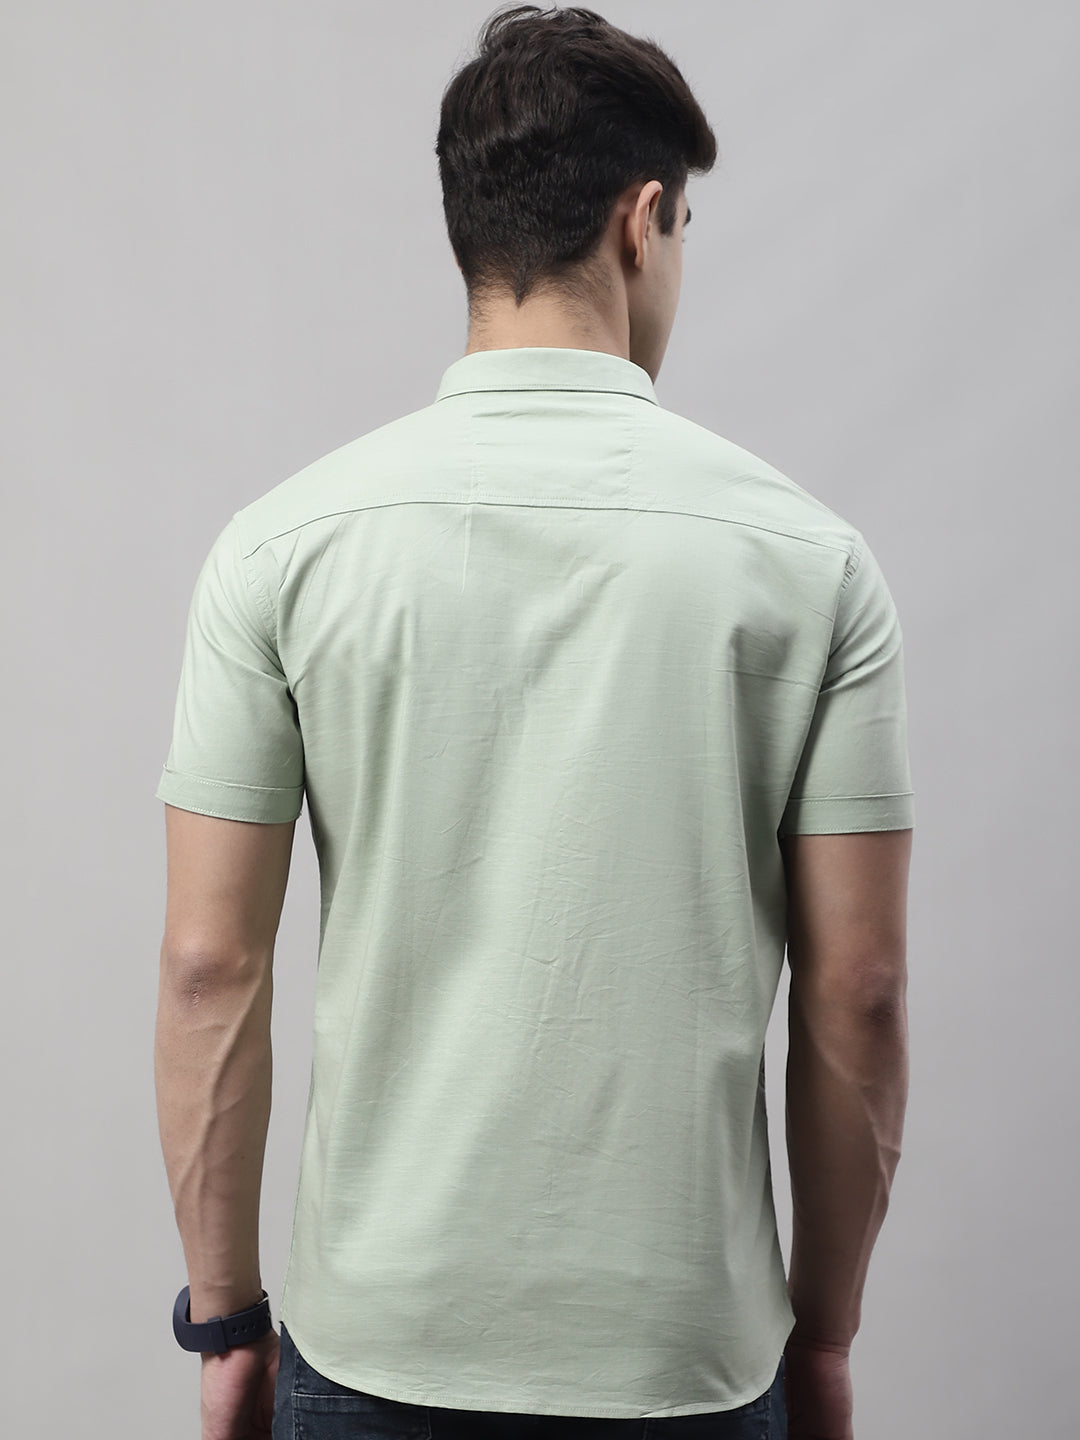 Unique and Fashionable Pure Cotton Half shirt - Light Green